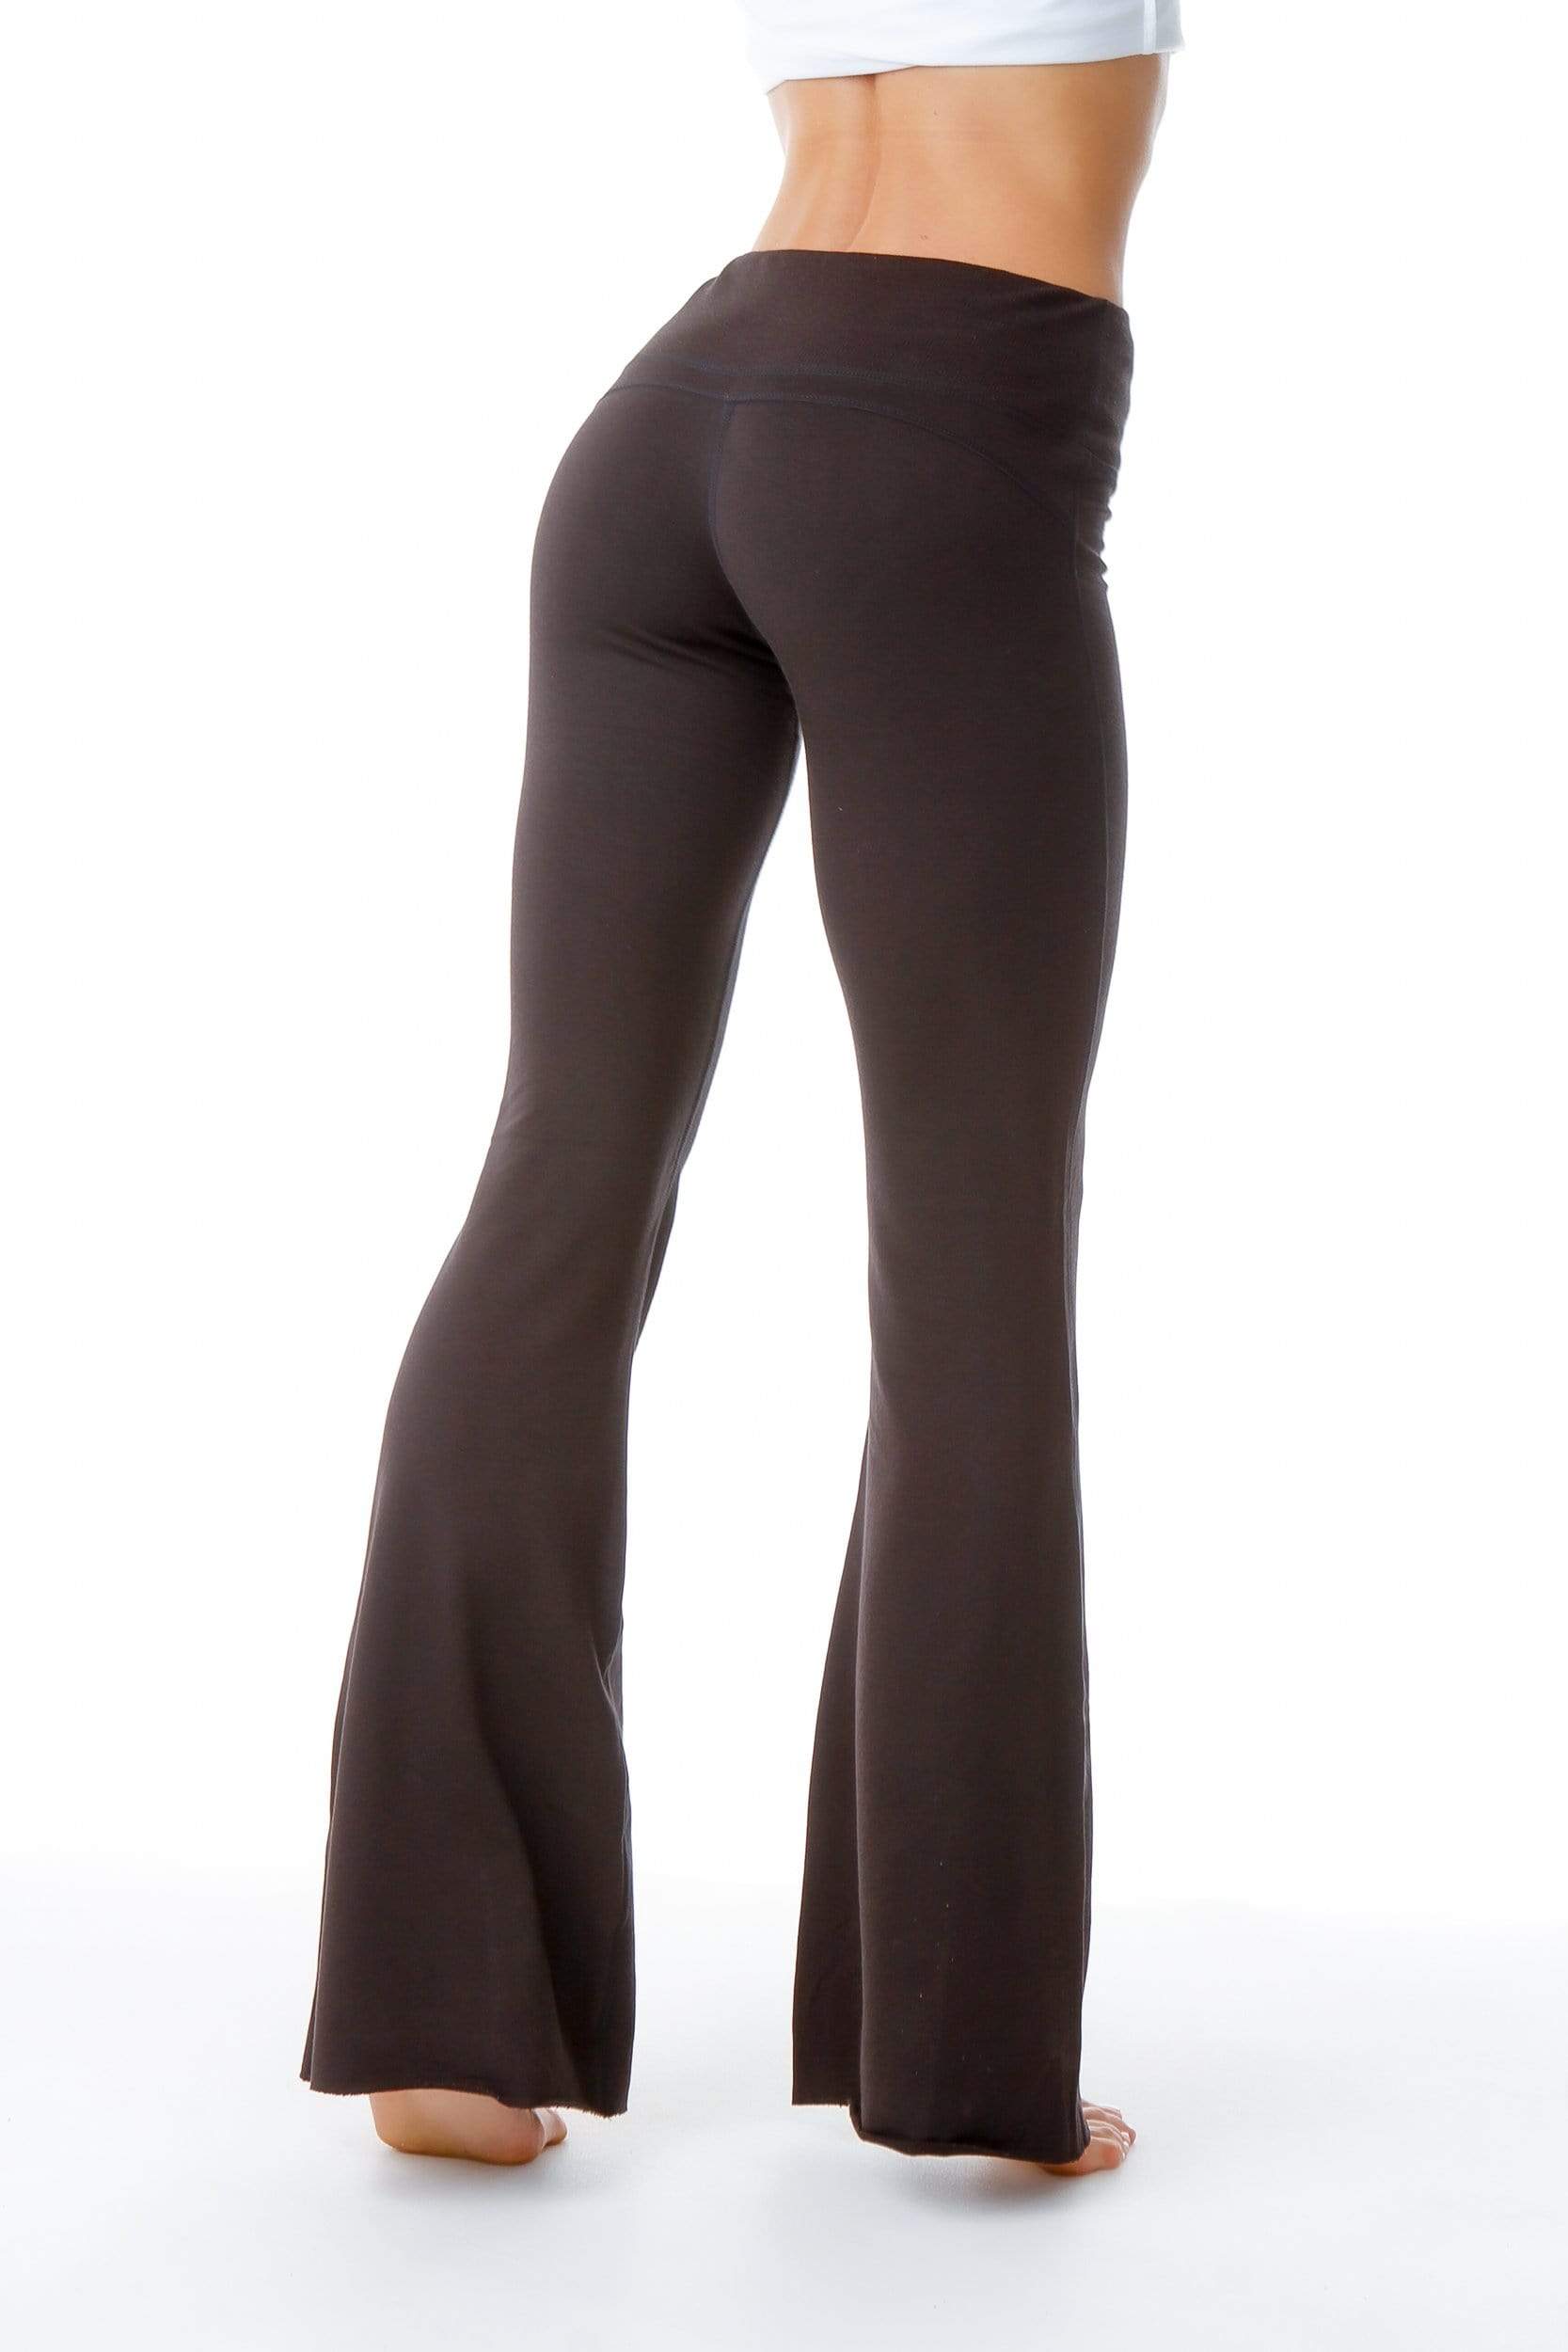 Black Flare Yoga Pants / Schwarze Yoga Hose, Schlaghose